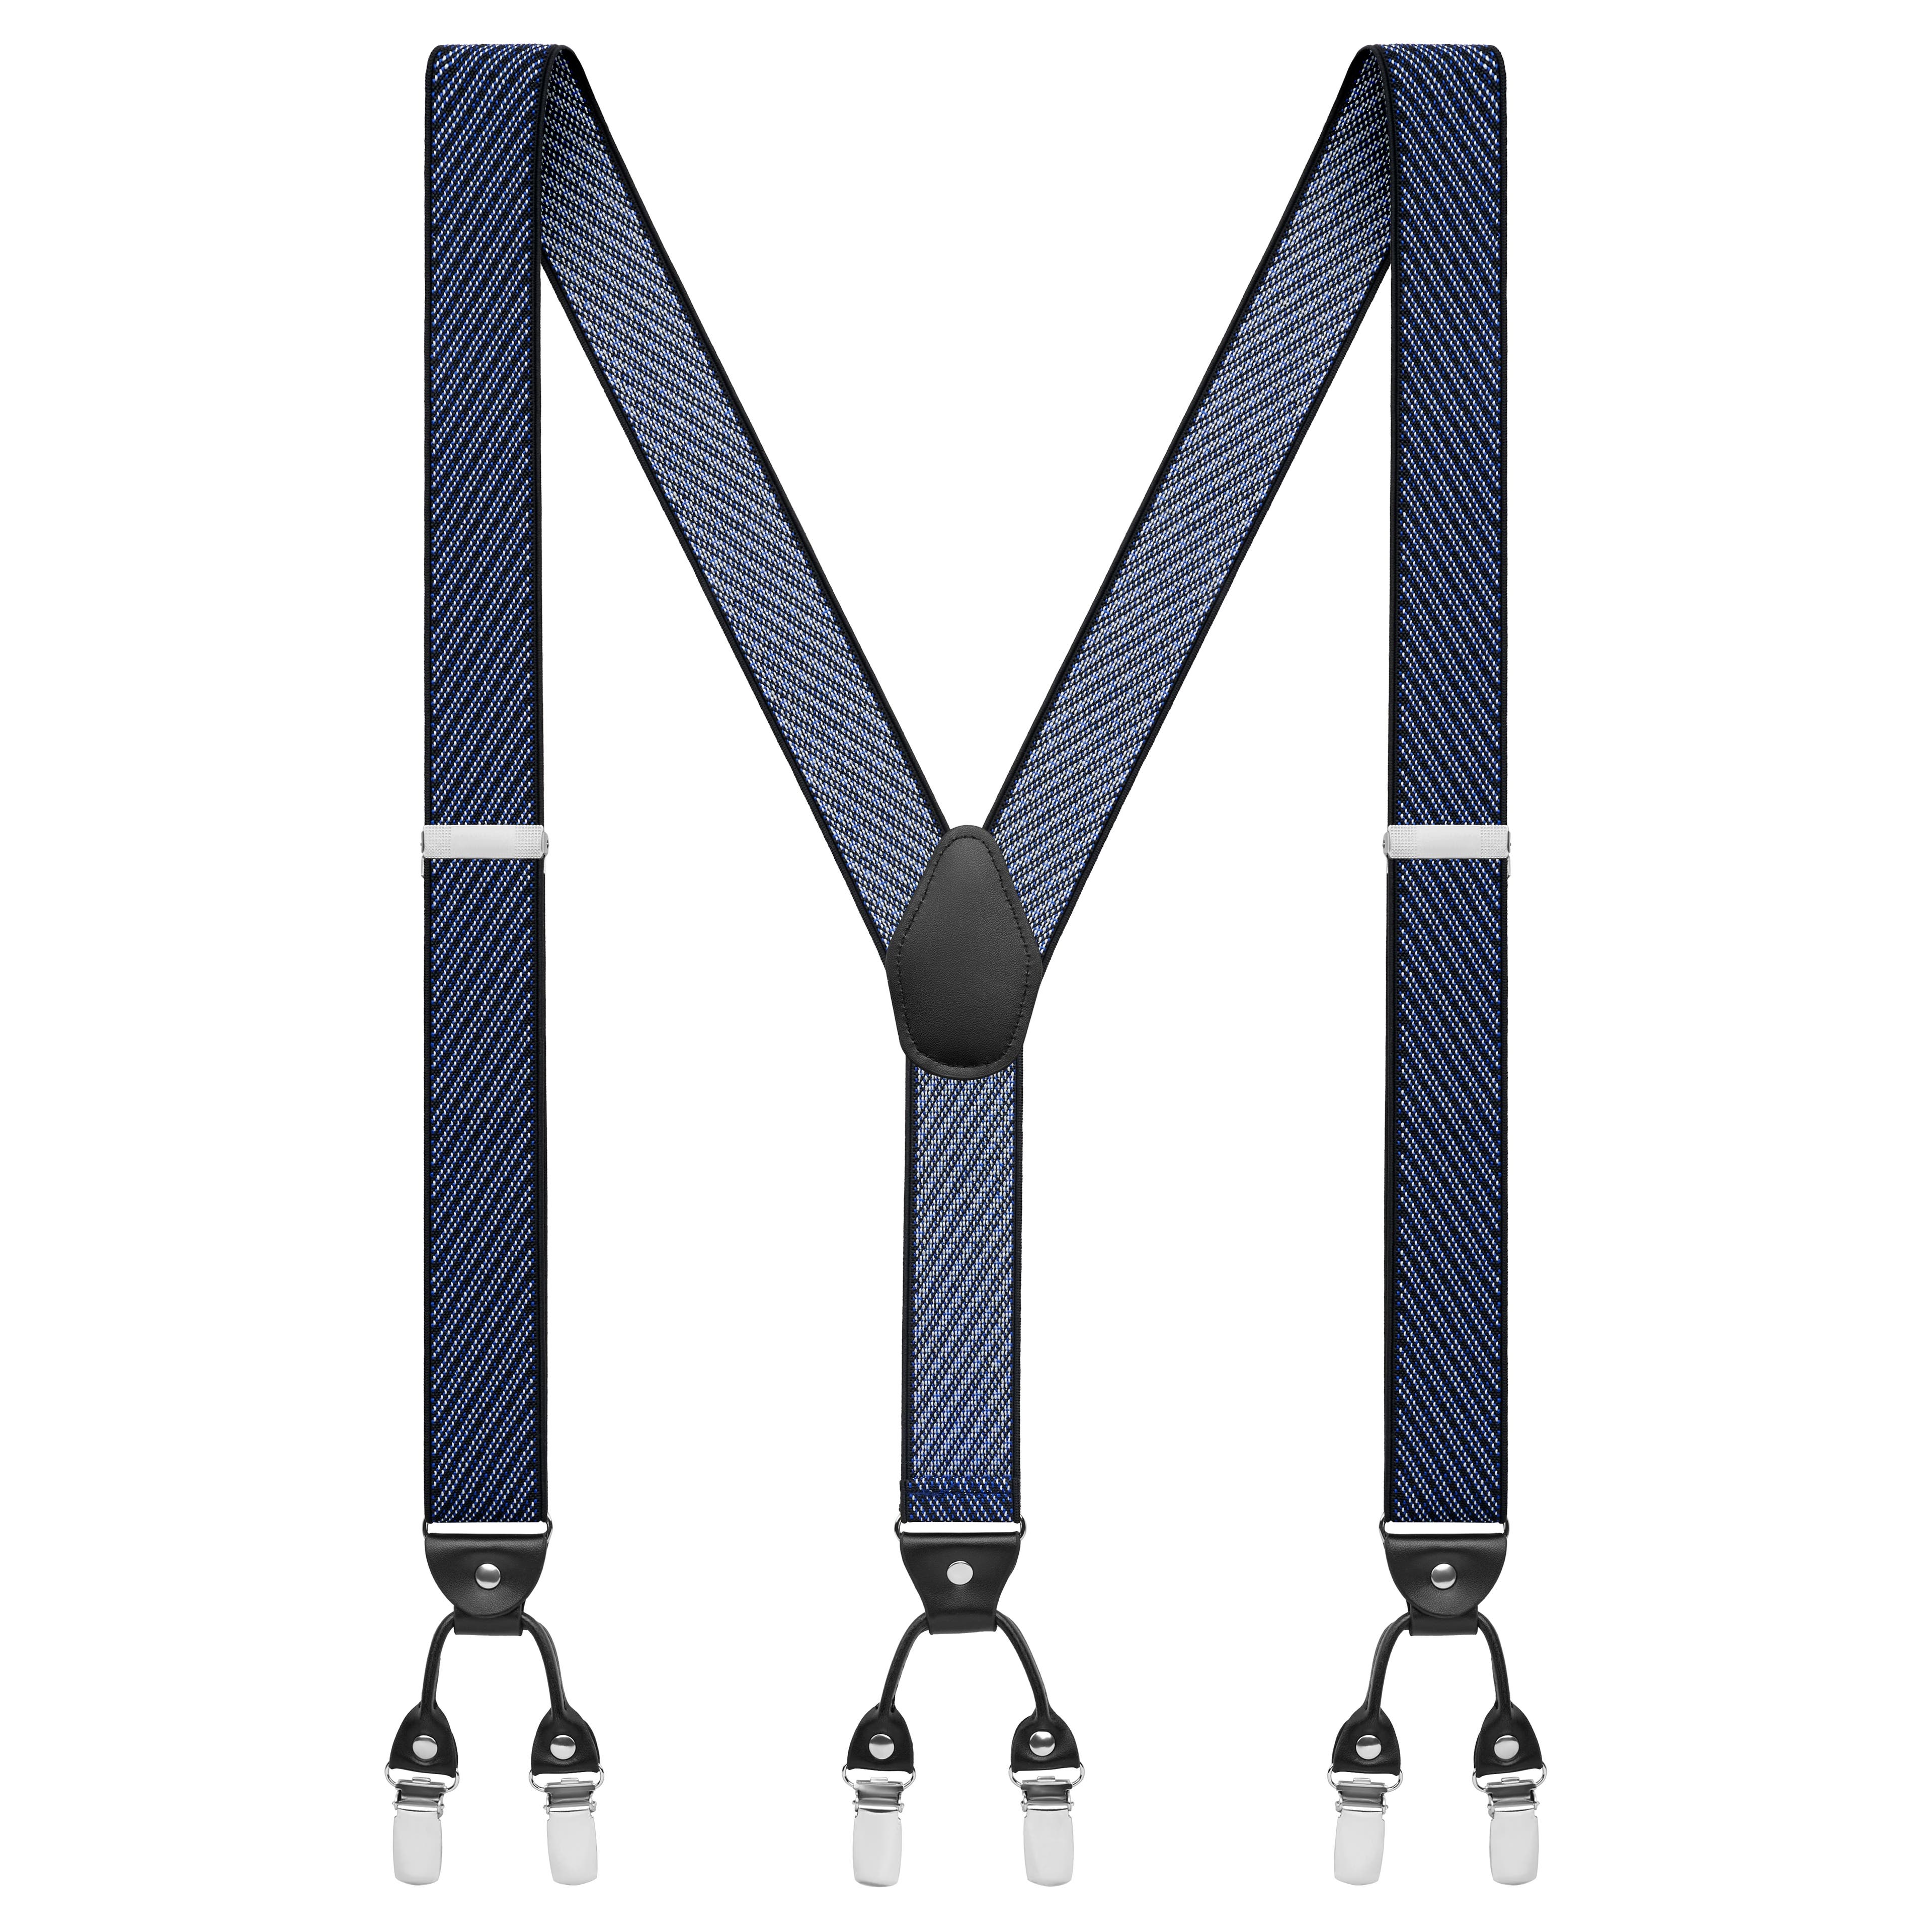 Vexel | Wide Blue & White Striped Suspenders